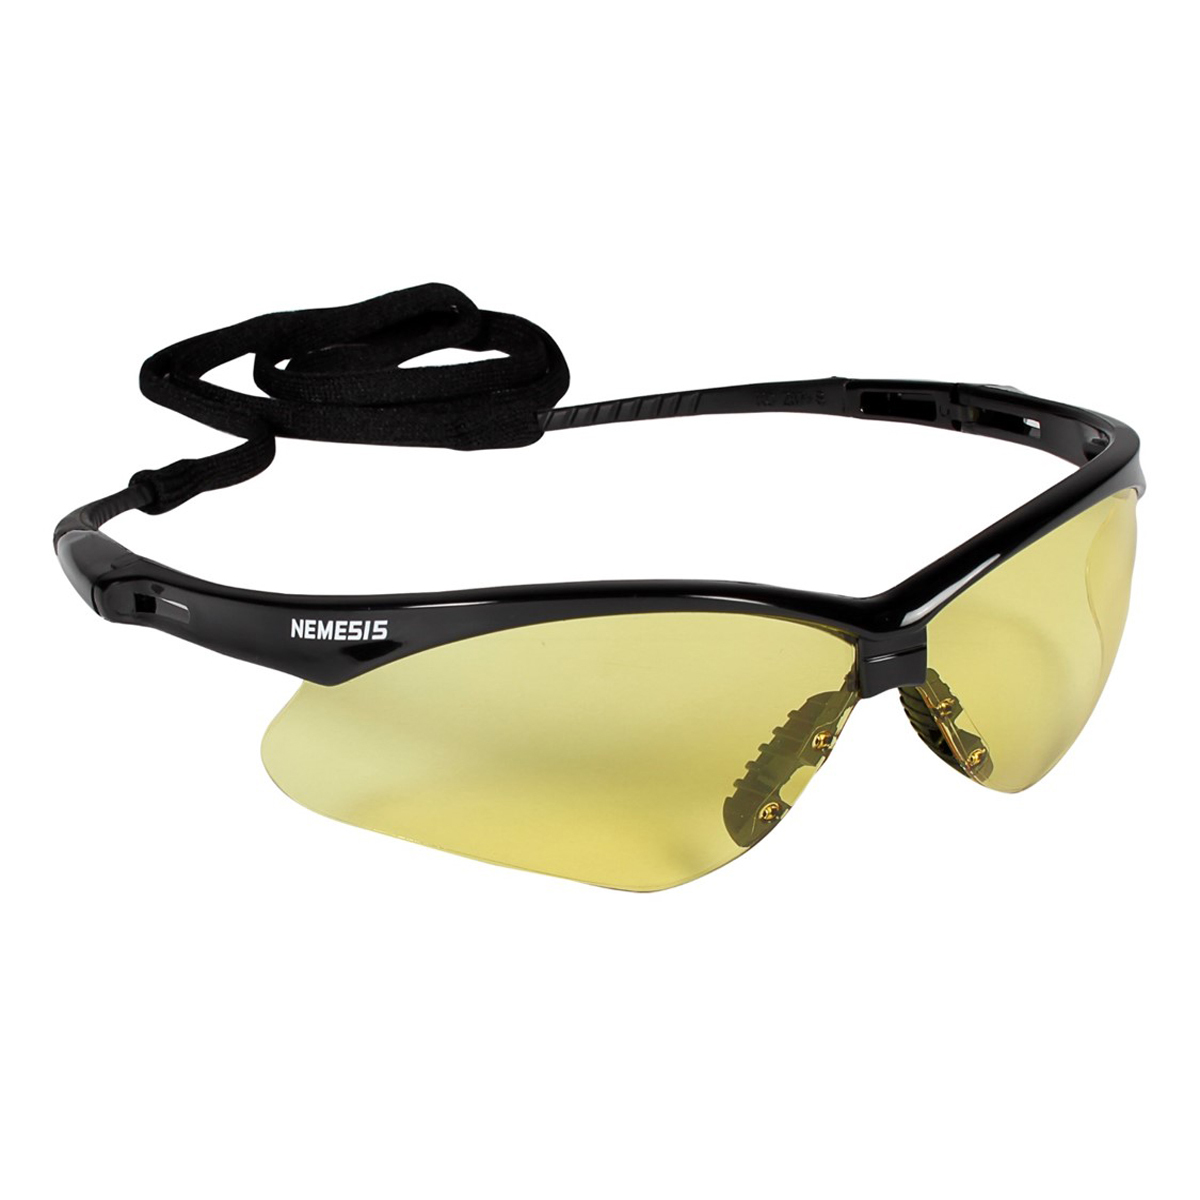 Kimberly-Clark Professional* KleenGuard™ Nemesis* Black Safety Glasses With Amber Anti-Fog/Hard Coat Lens (Availability restrict